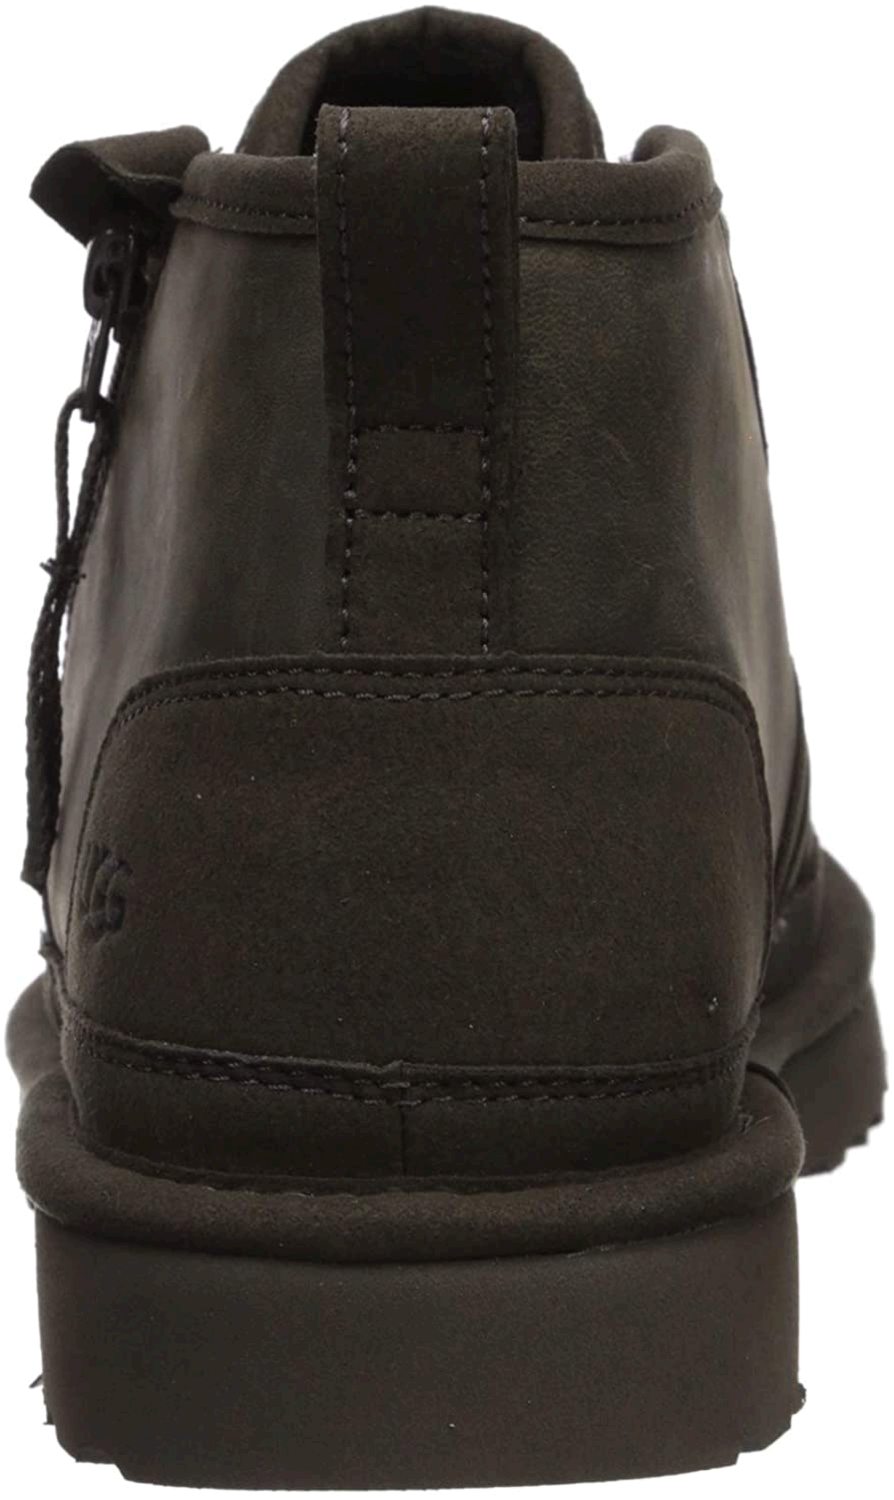 Ugg Australia Mens 1103883 Leather Cap Toe Ankle Fashion, Black Olive ...